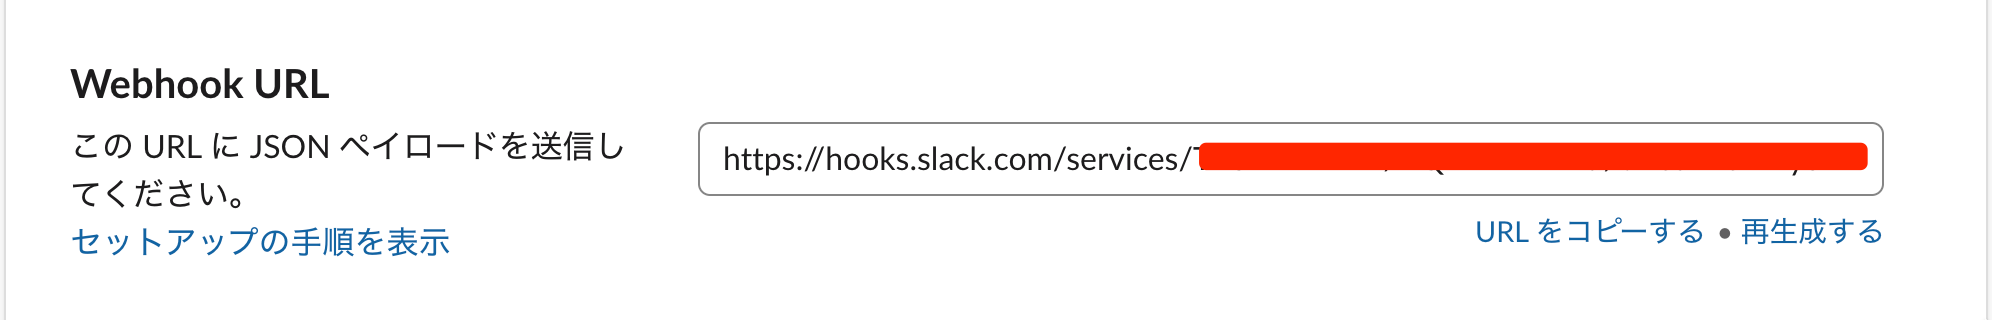 Cursor_と_Incoming_Webhook___Slack_App_ディレクトリ.png